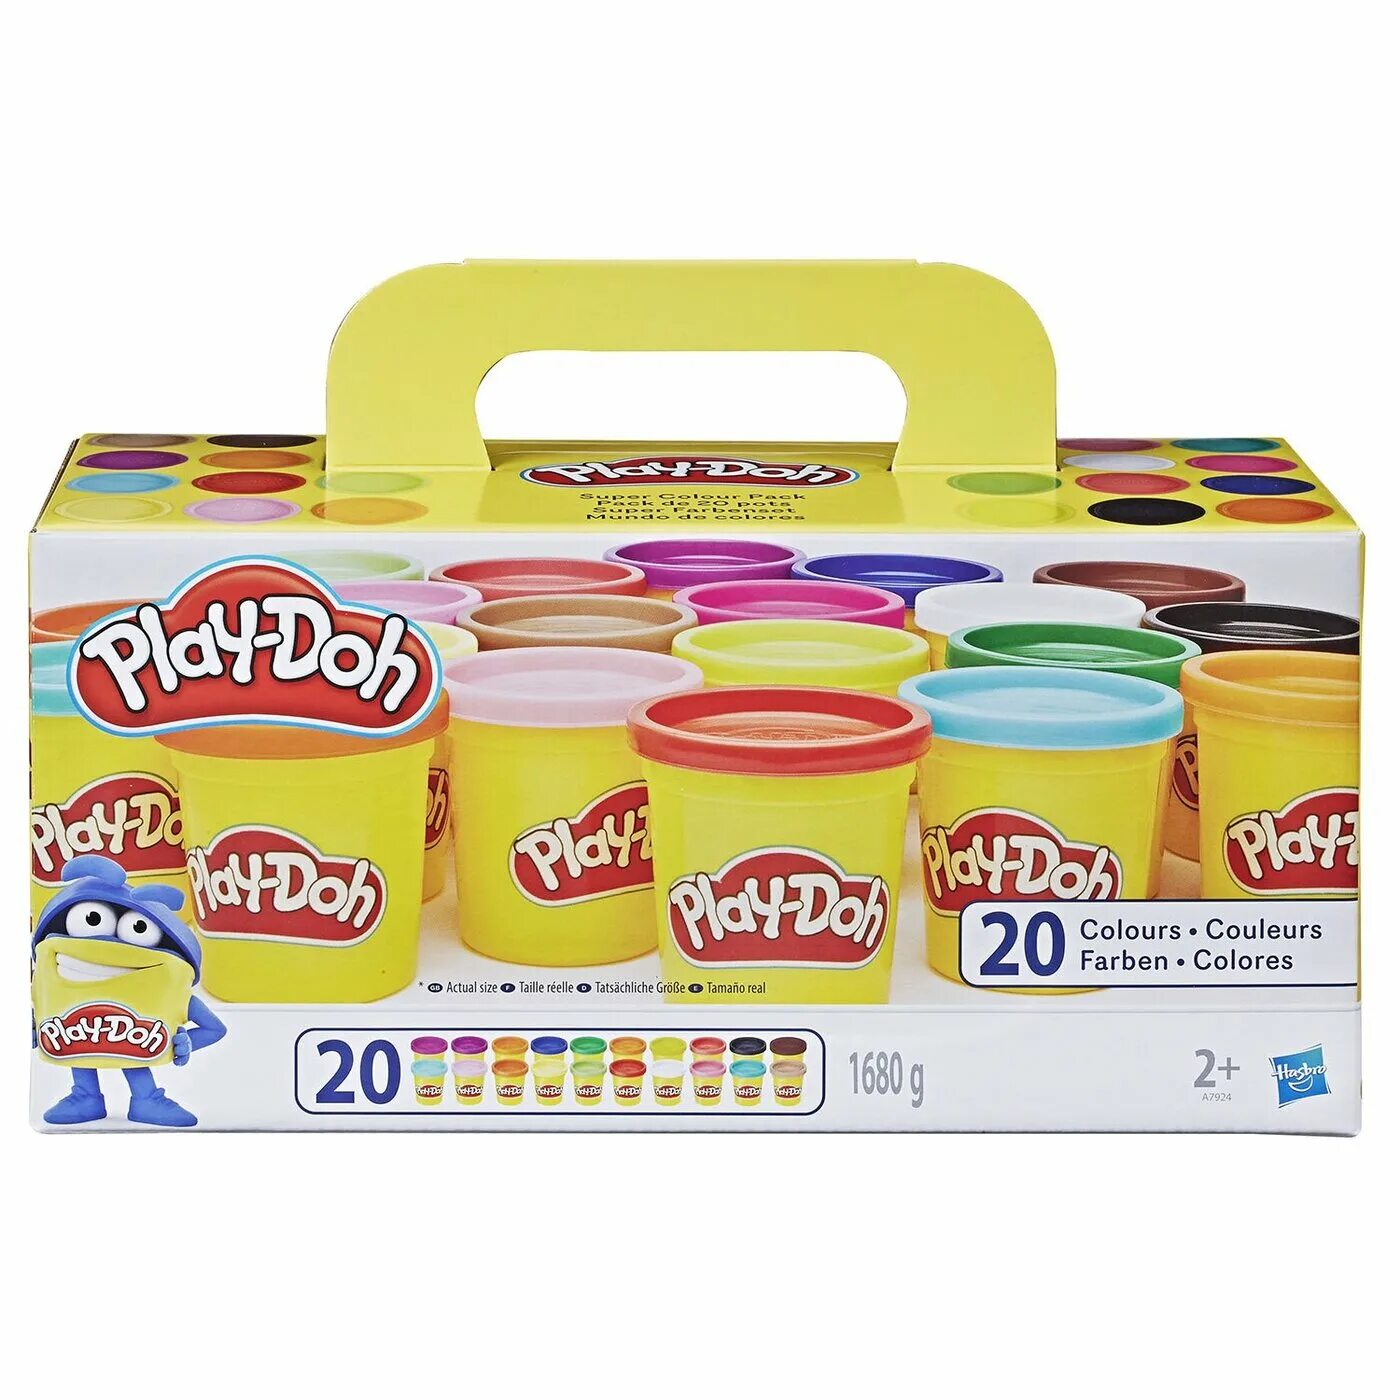 Пластилин Play-Doh 20 цветов. Плей до набор пластилина 20 банок. Набор пластилина 20 банок PD a7924. Пластилин плей до 20 банок. Большой набор пластилина